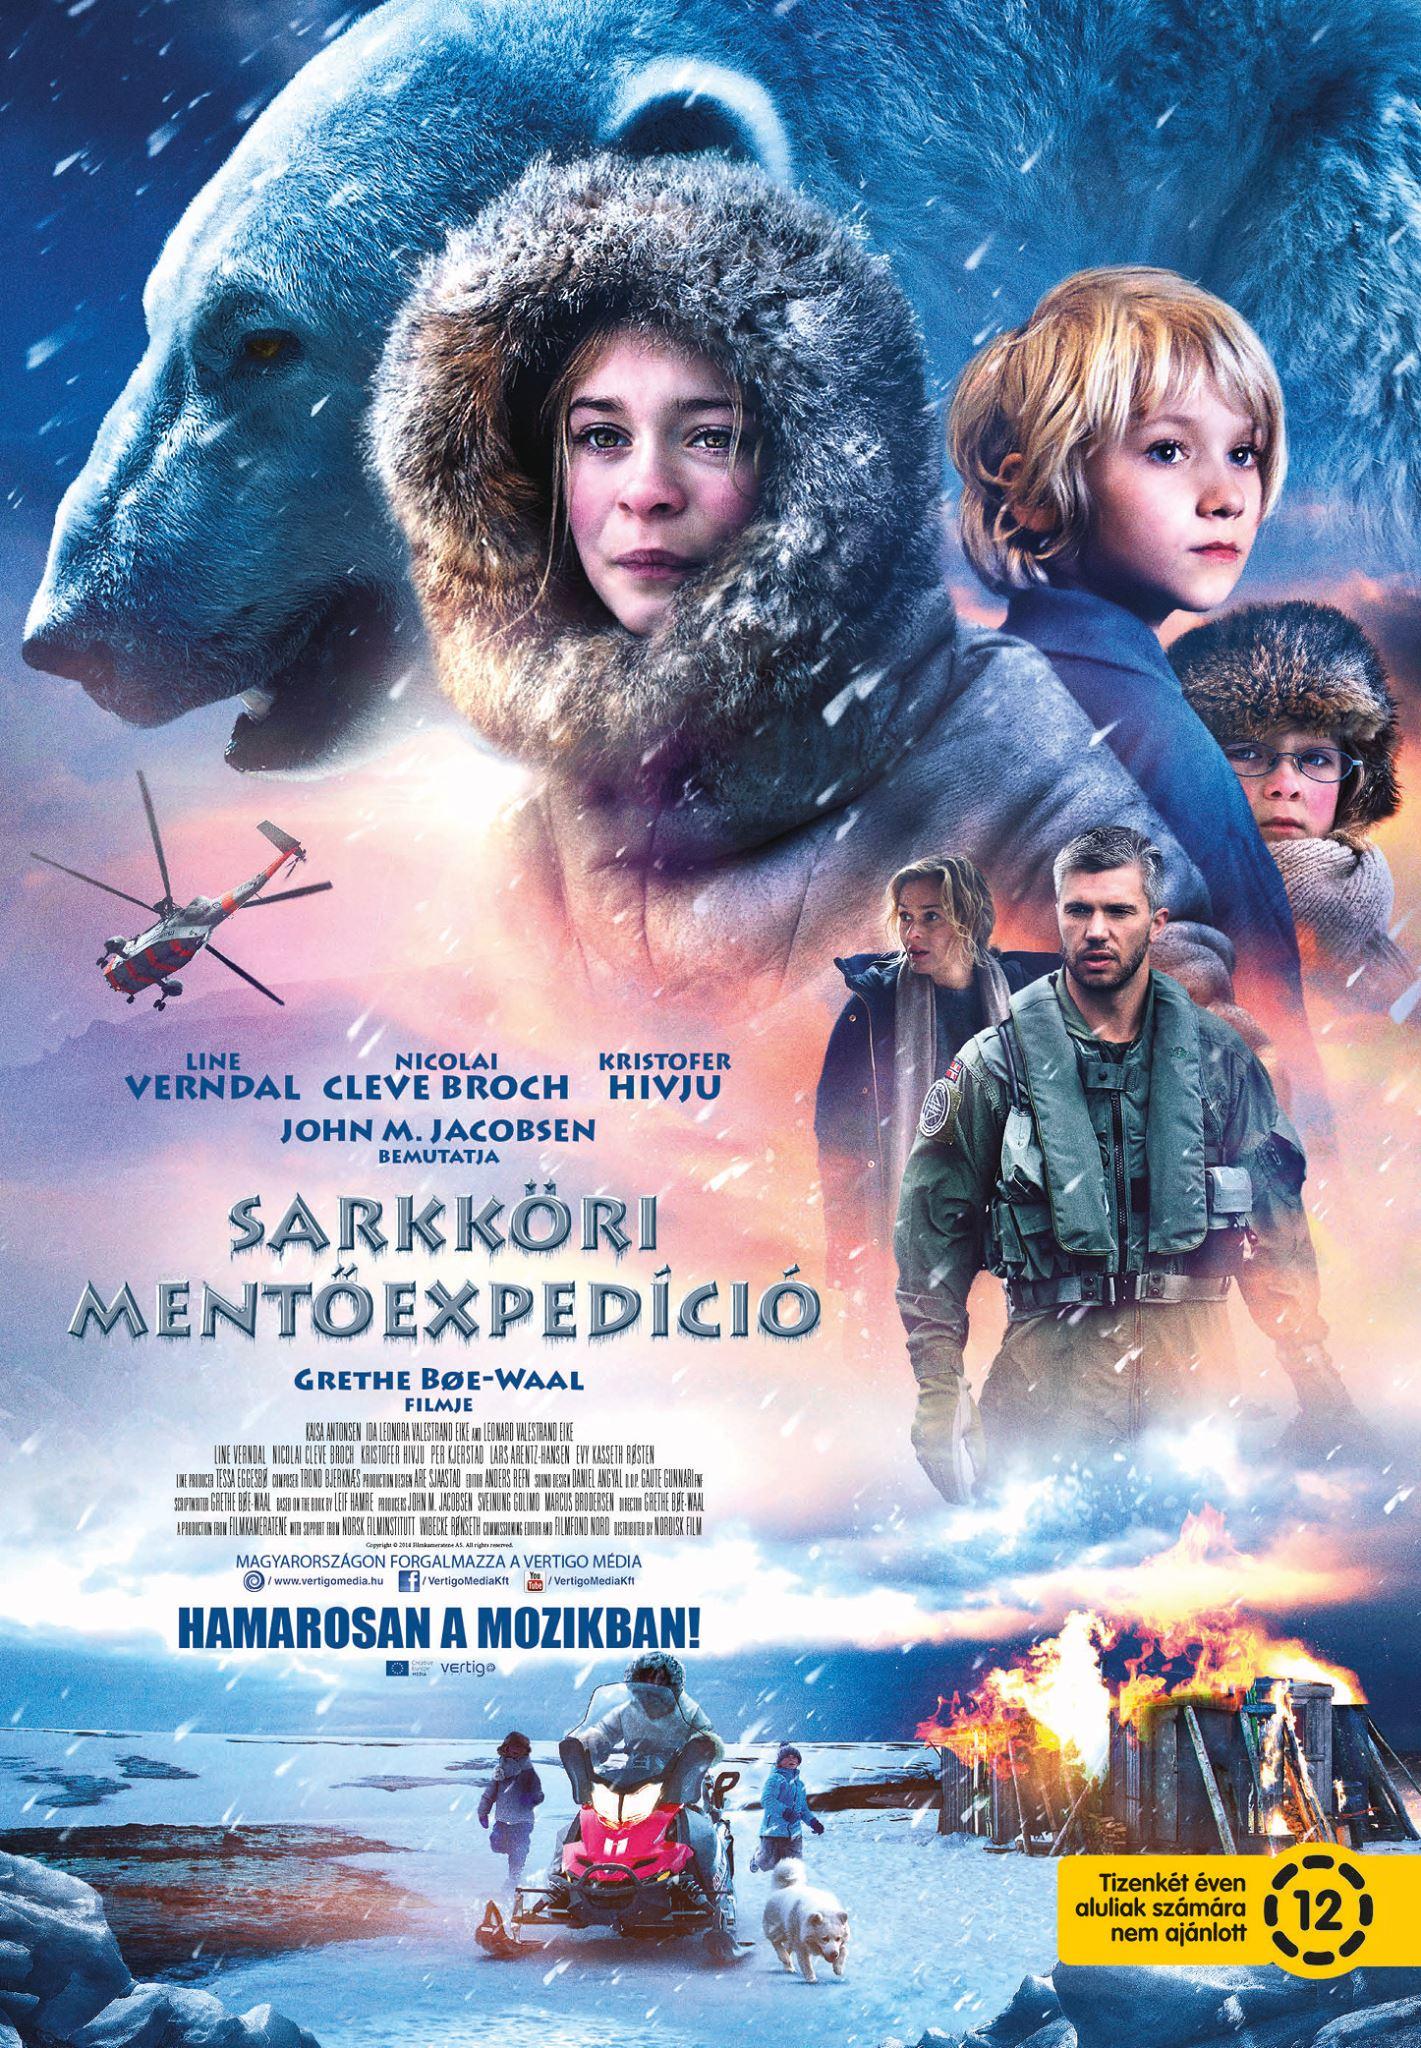 Постер фильма Operasjon Arktis